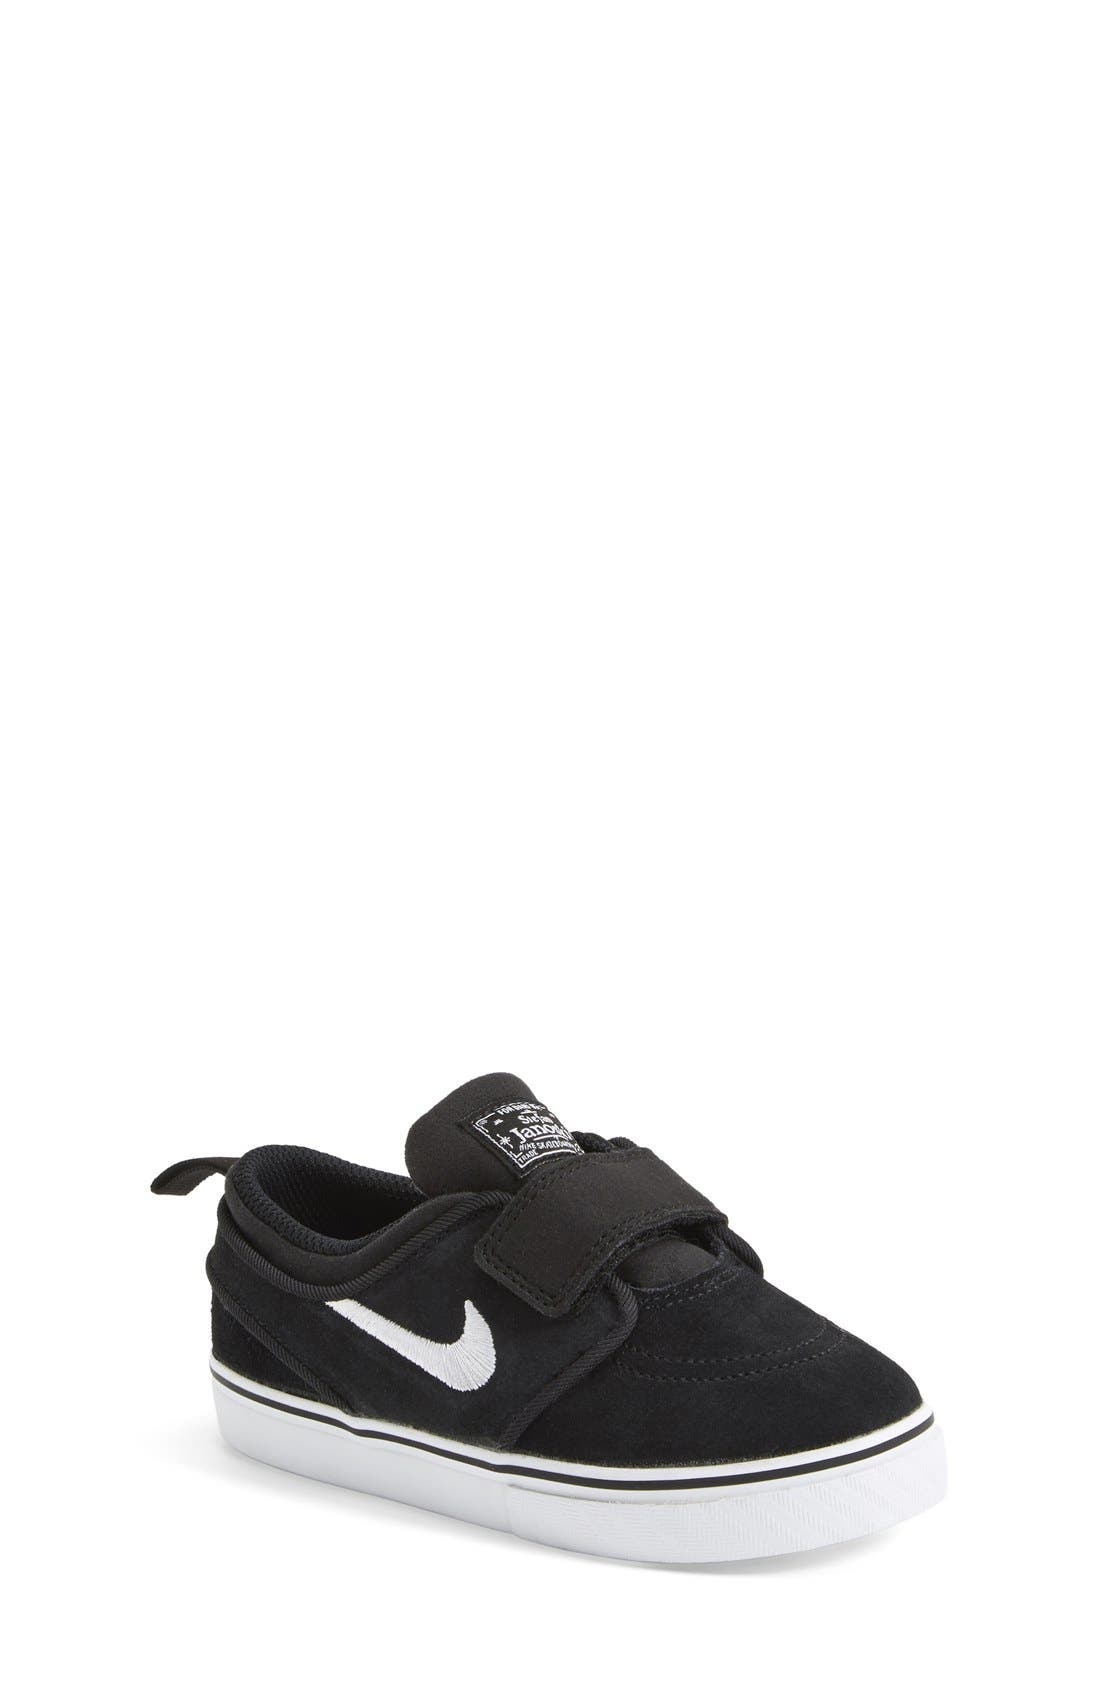 Nike 'Stefan Janoski' Skate Shoe 